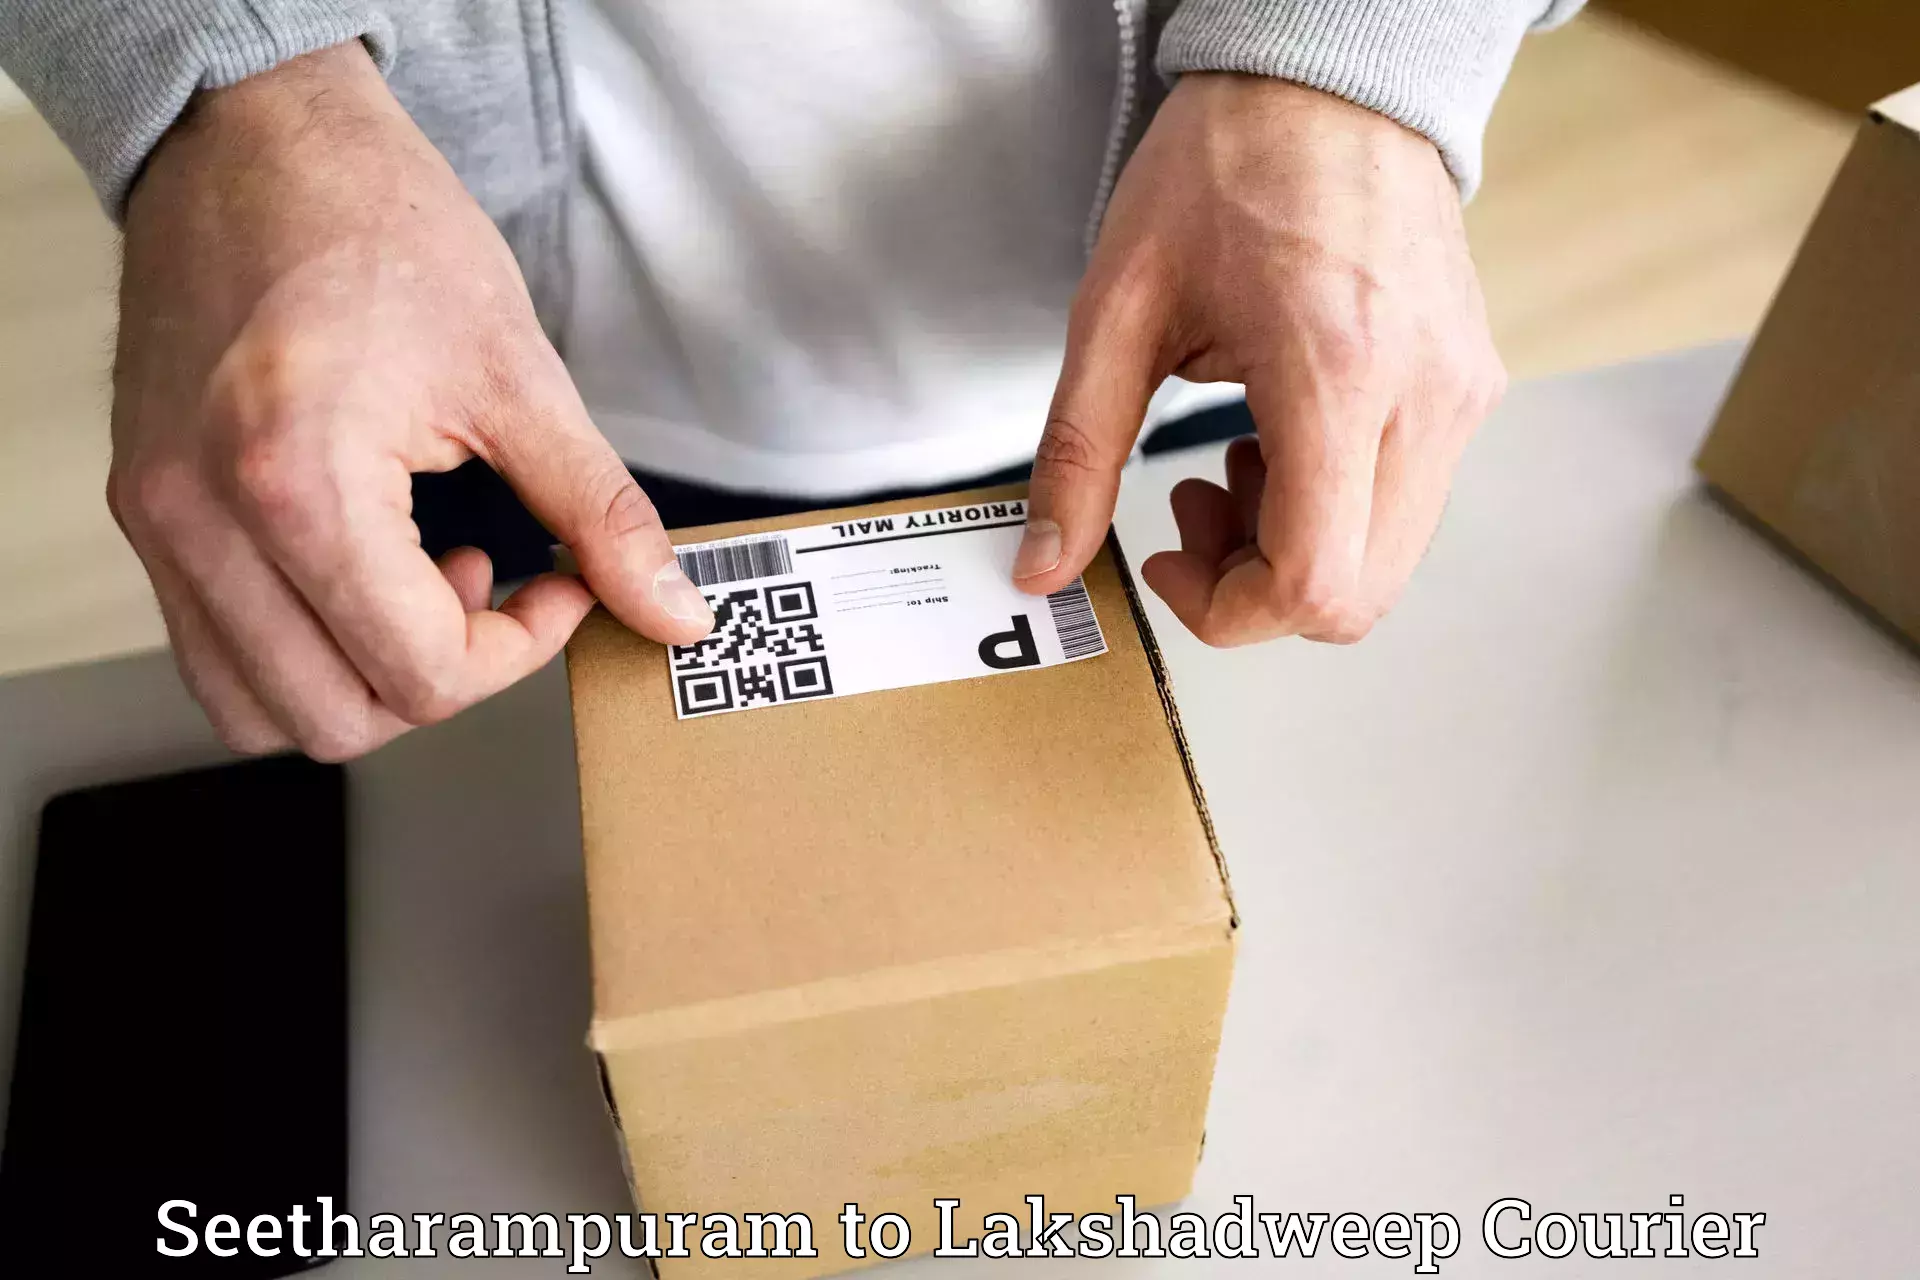 Courier service partnerships Seetharampuram to Lakshadweep